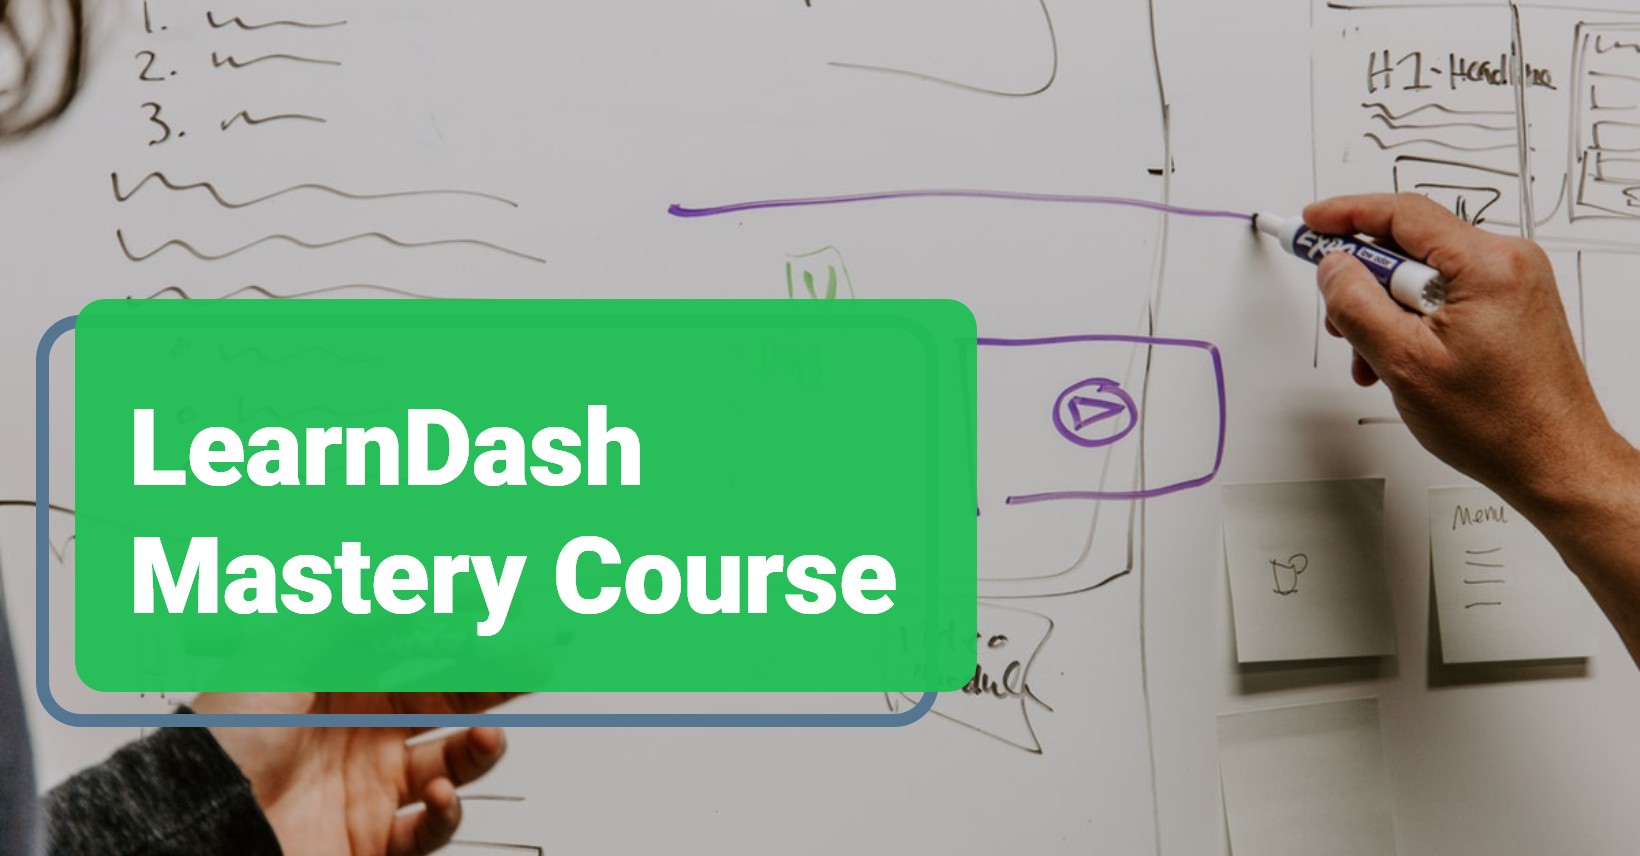 LearnDash Mastery Course2 1 -